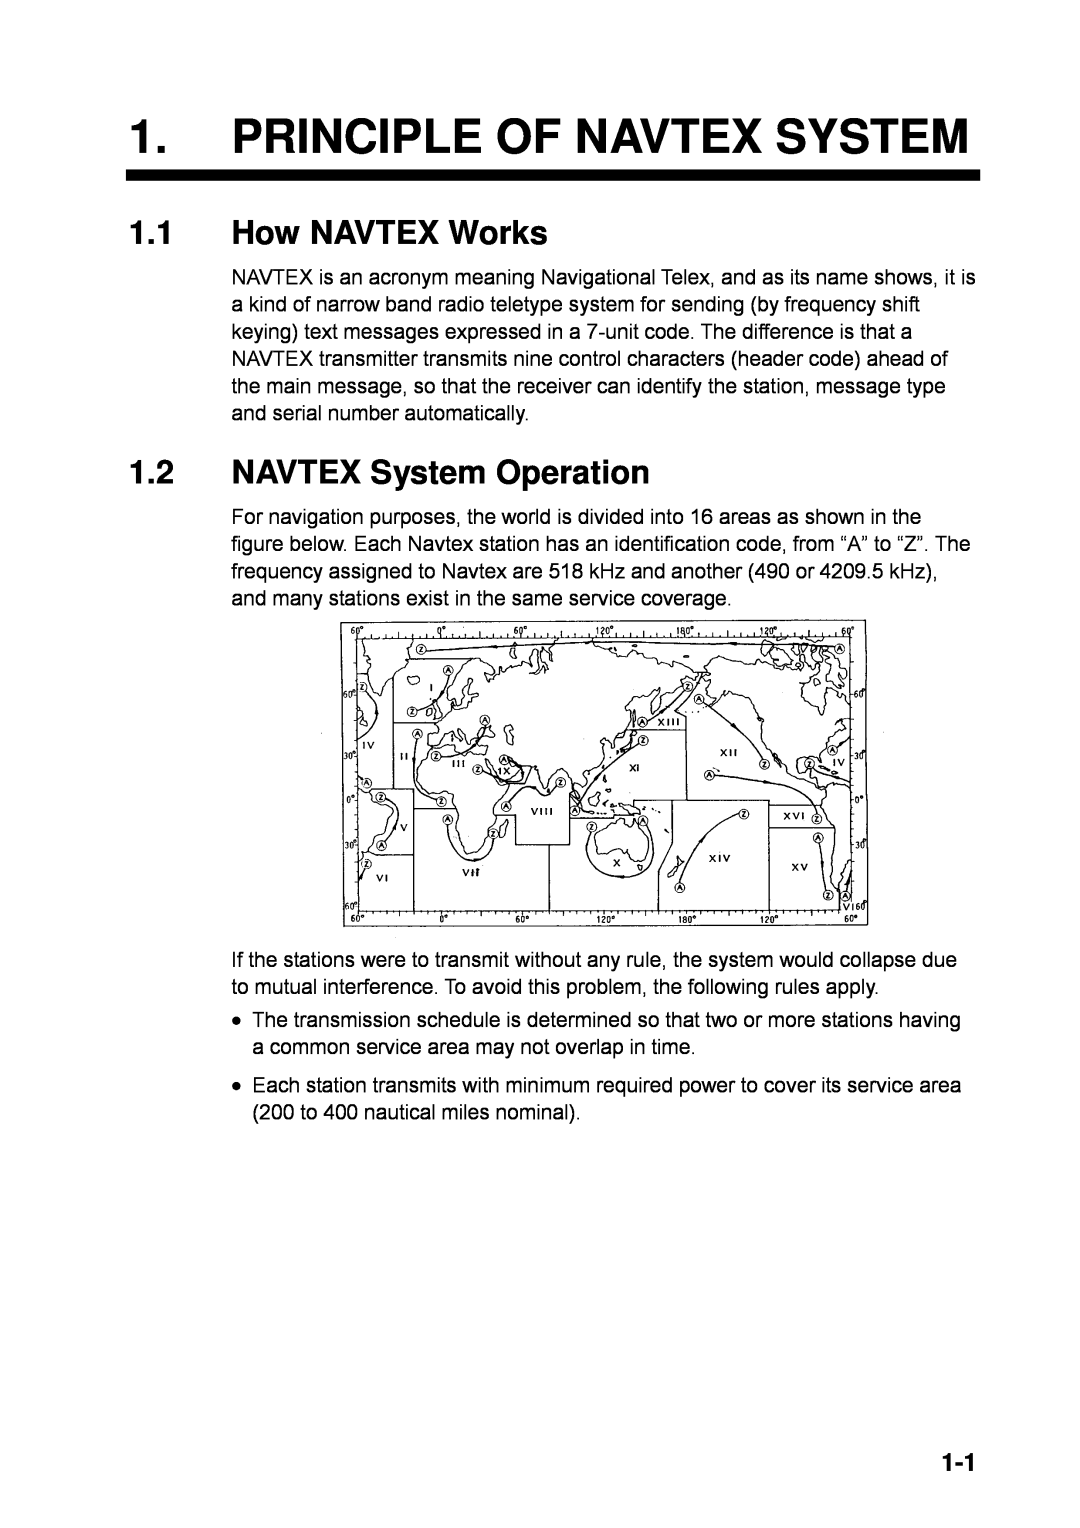 Furuno NX-700B manual Principle Of Navtex System, 1.1How NAVTEX Works, 1.2NAVTEX System Operation 